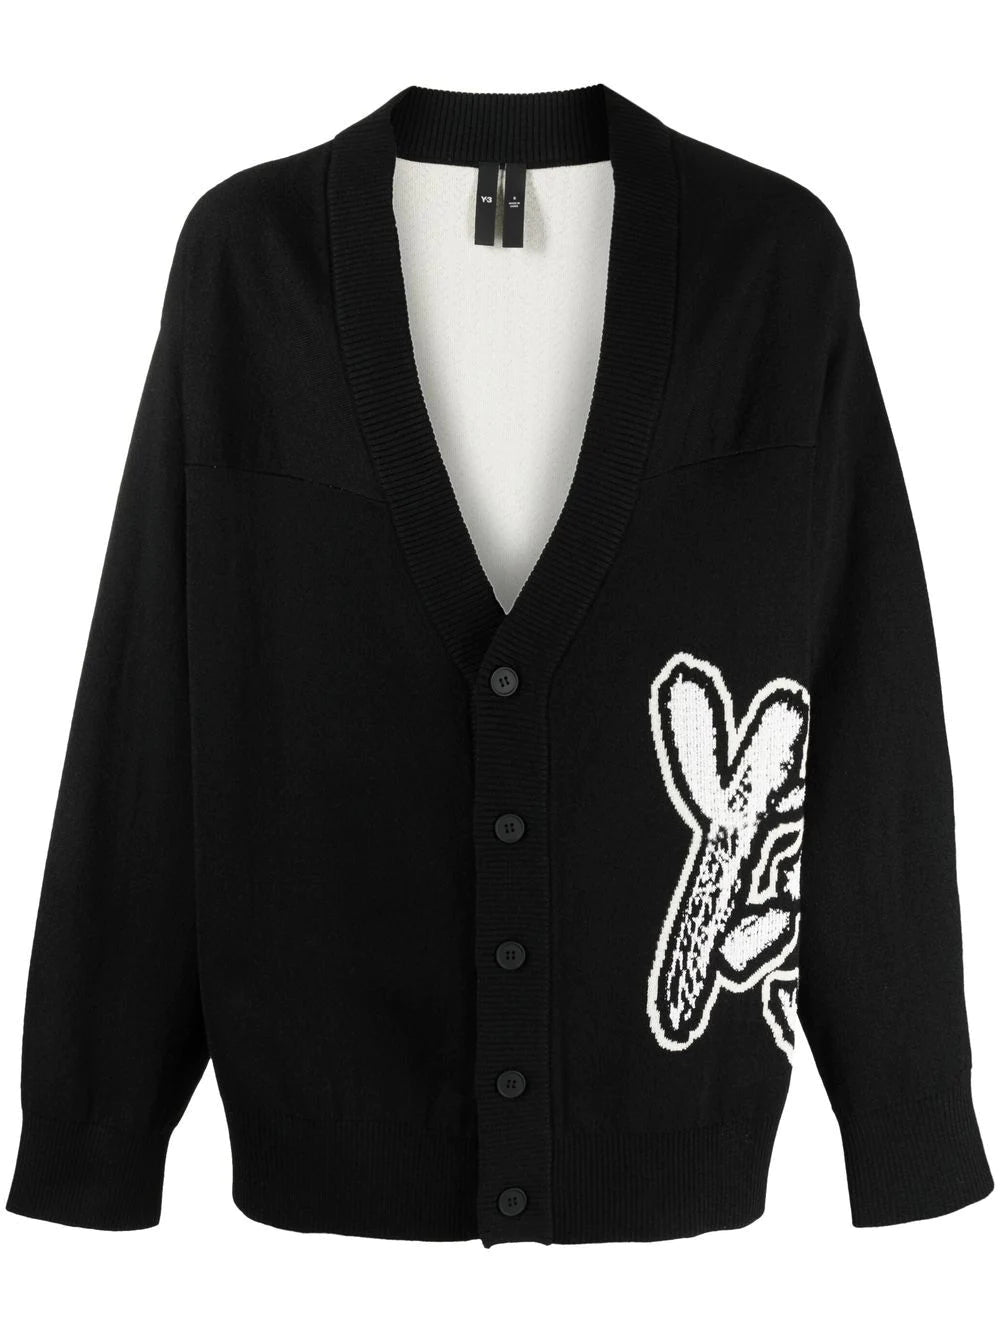 Y-3 │ Logo Knit Cardigan in Black │ Henrik Vibskov Boutique